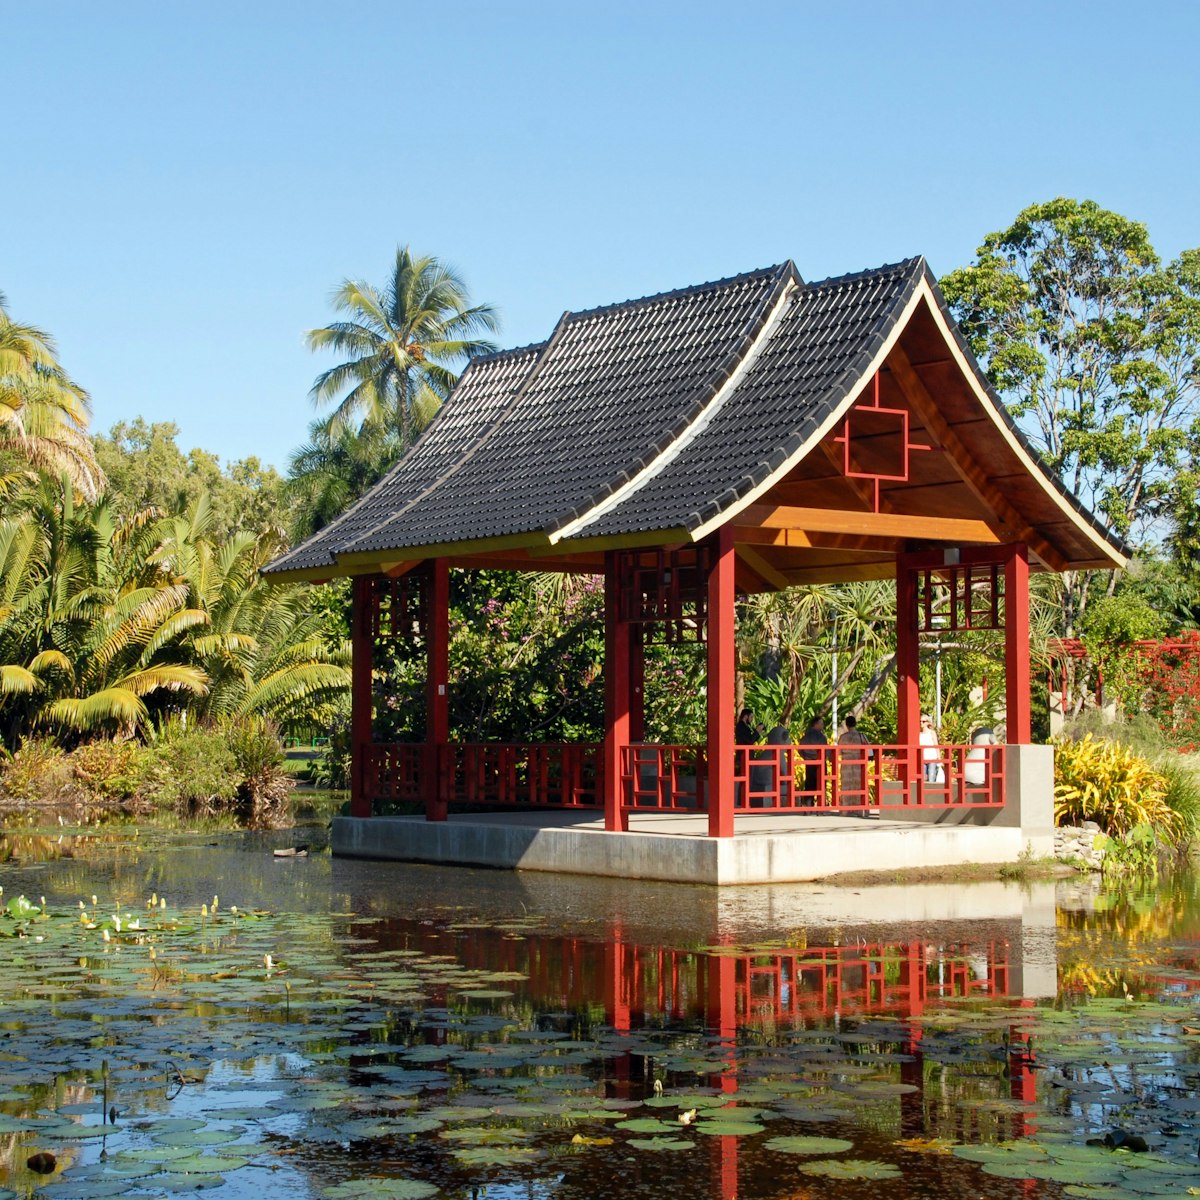 Cairns, Australia - July 8, 2017: Zhanjiang Chinese Friendship Pavilion at Cairns Botanic Gardens